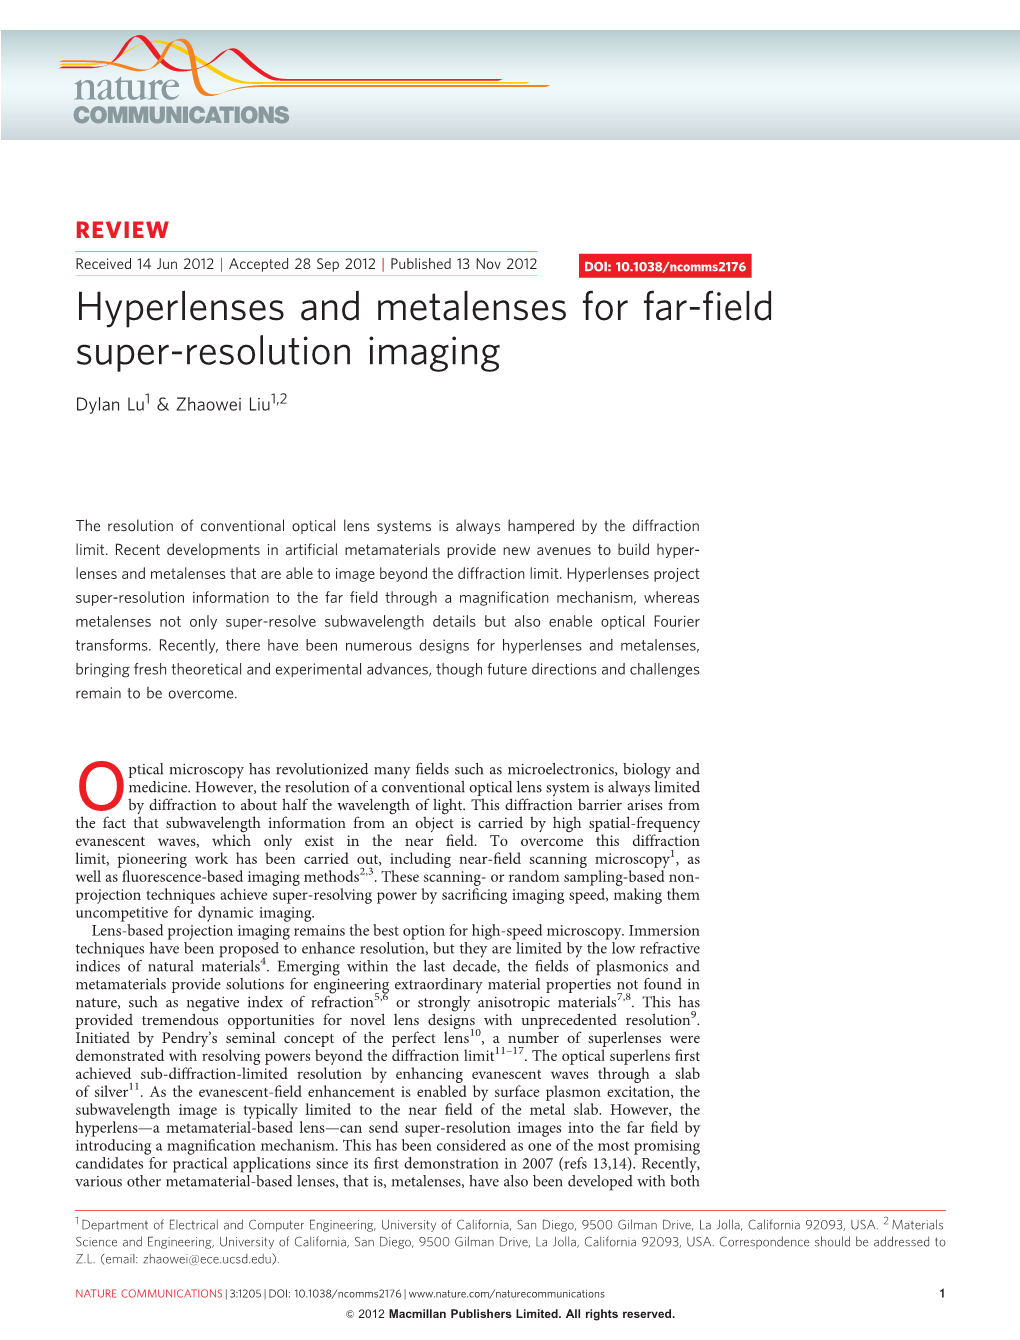 Hyperlenses and Metalenses for Far-Field Super-Resolution Imaging